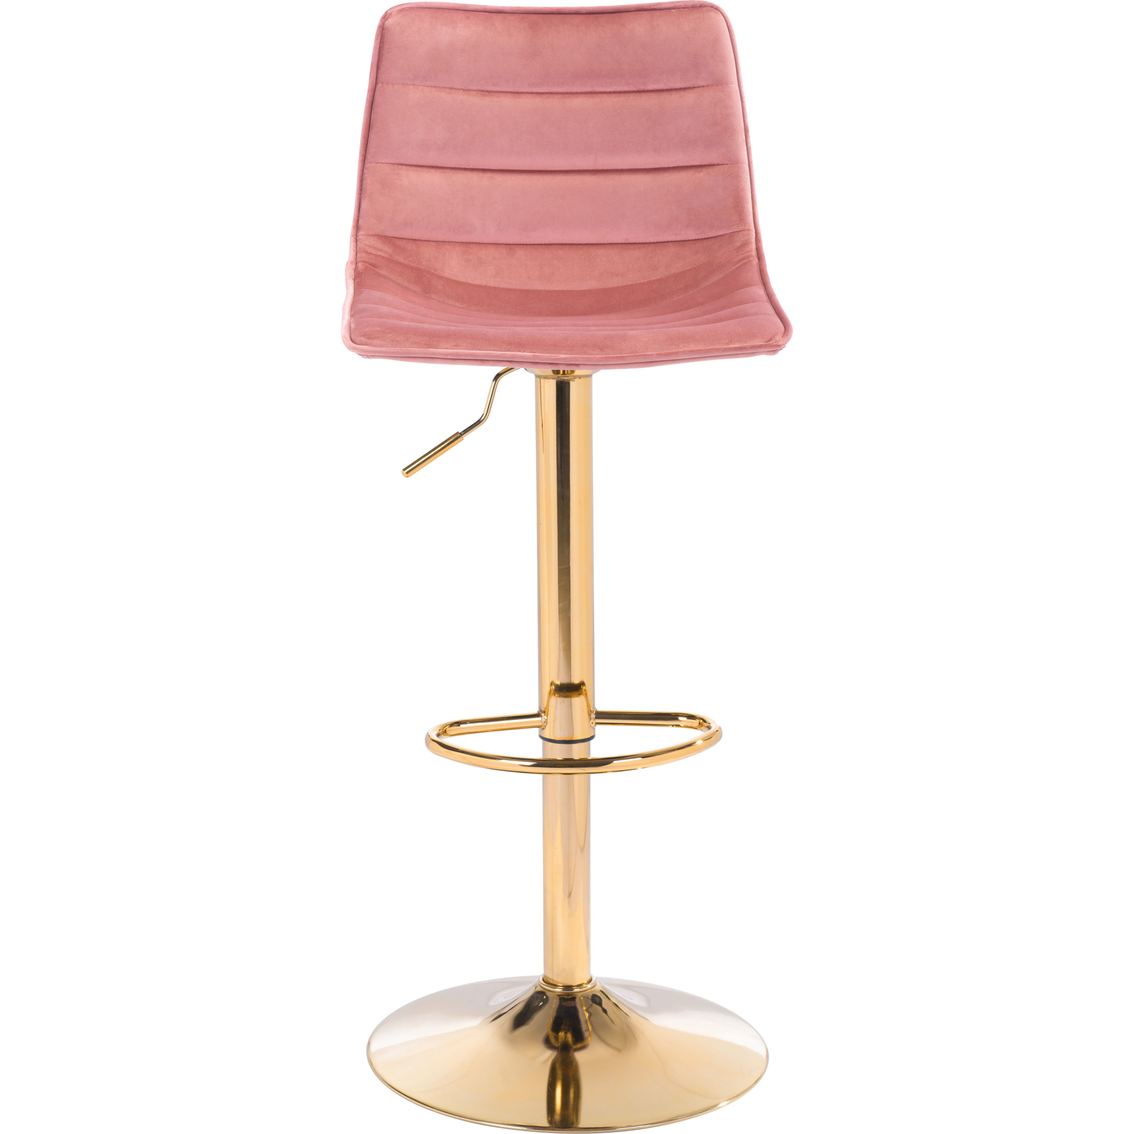 Zuo Modern Prima Bar Chair - Image 3 of 10